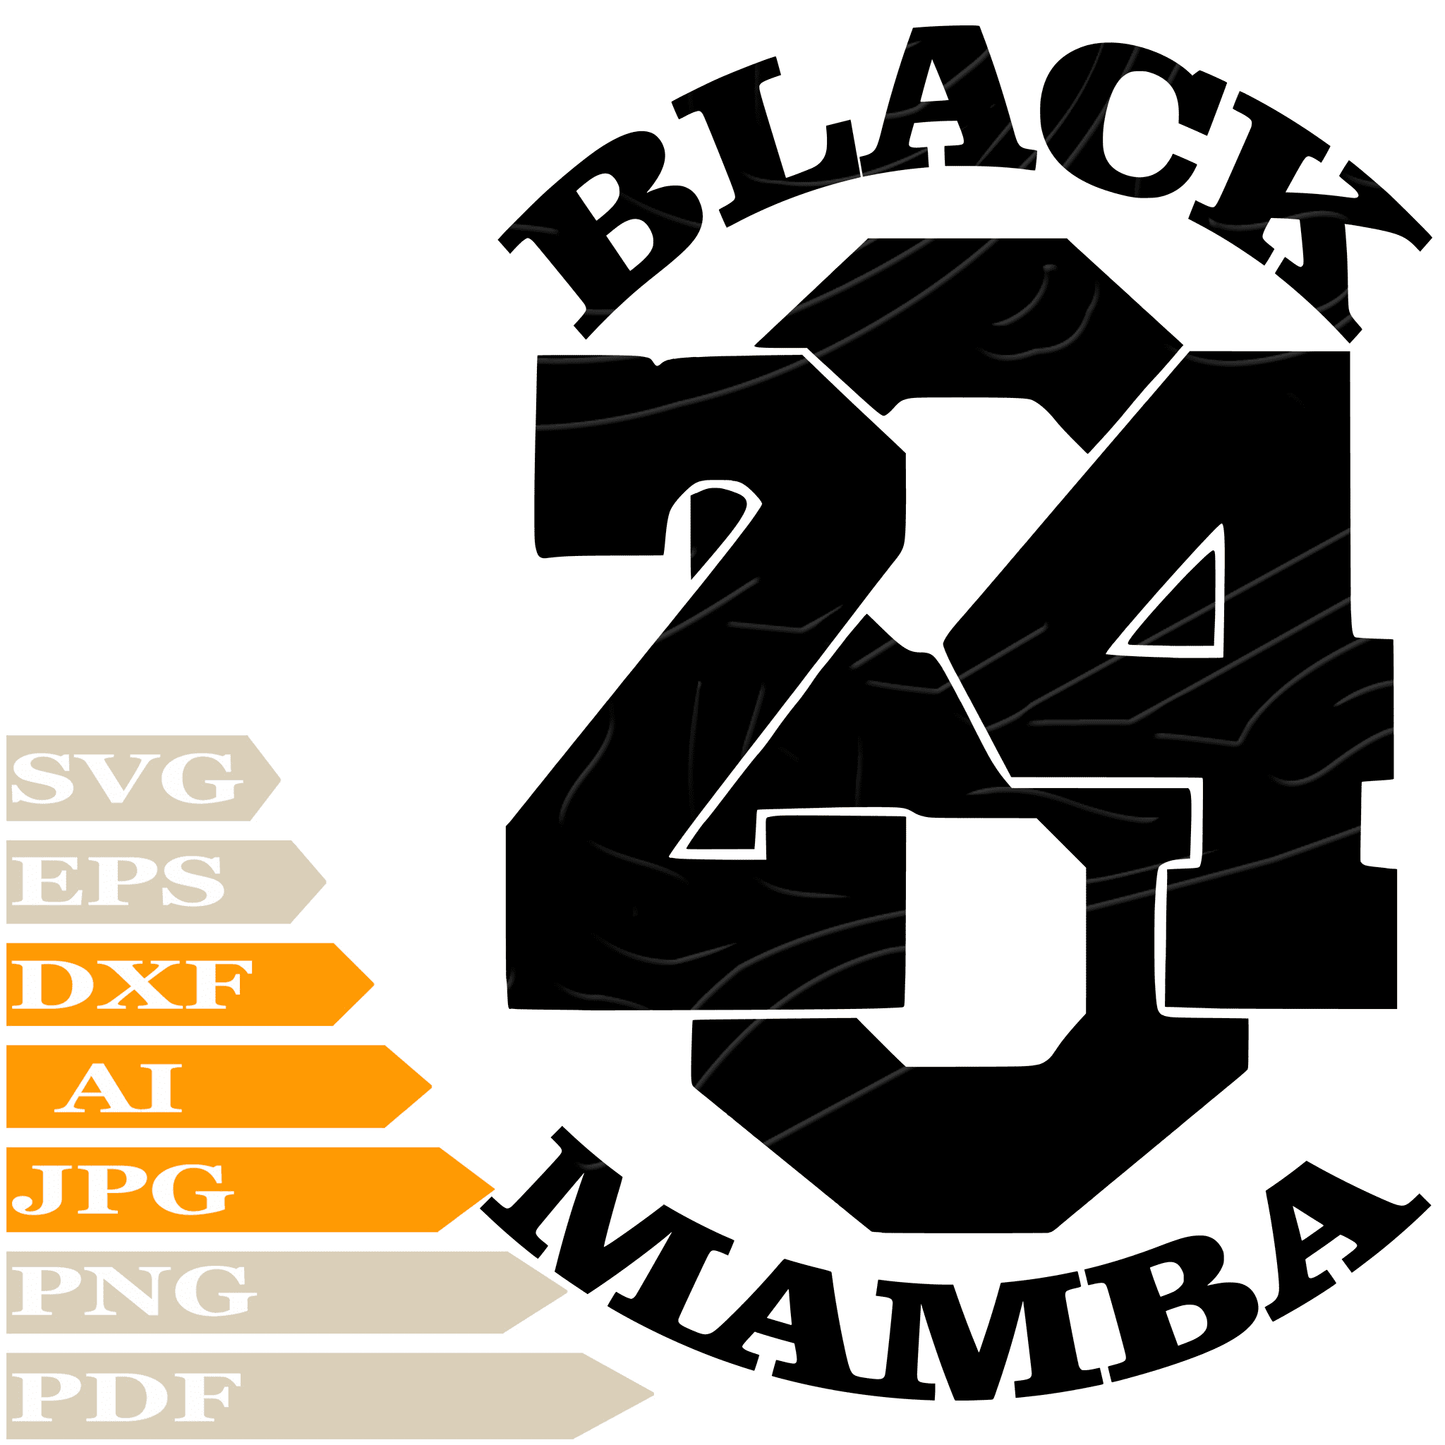 Kobe Bryant SVG File, black Mamba Logo SVG Design, Los Angeles Lakers Player SVG, Kobe Bryant 24 Vector, Black Mamba PNG, Image Cut, For Cricut, Clipart, Cut File, Print, Digital Download, T-Shirt, Silhouette